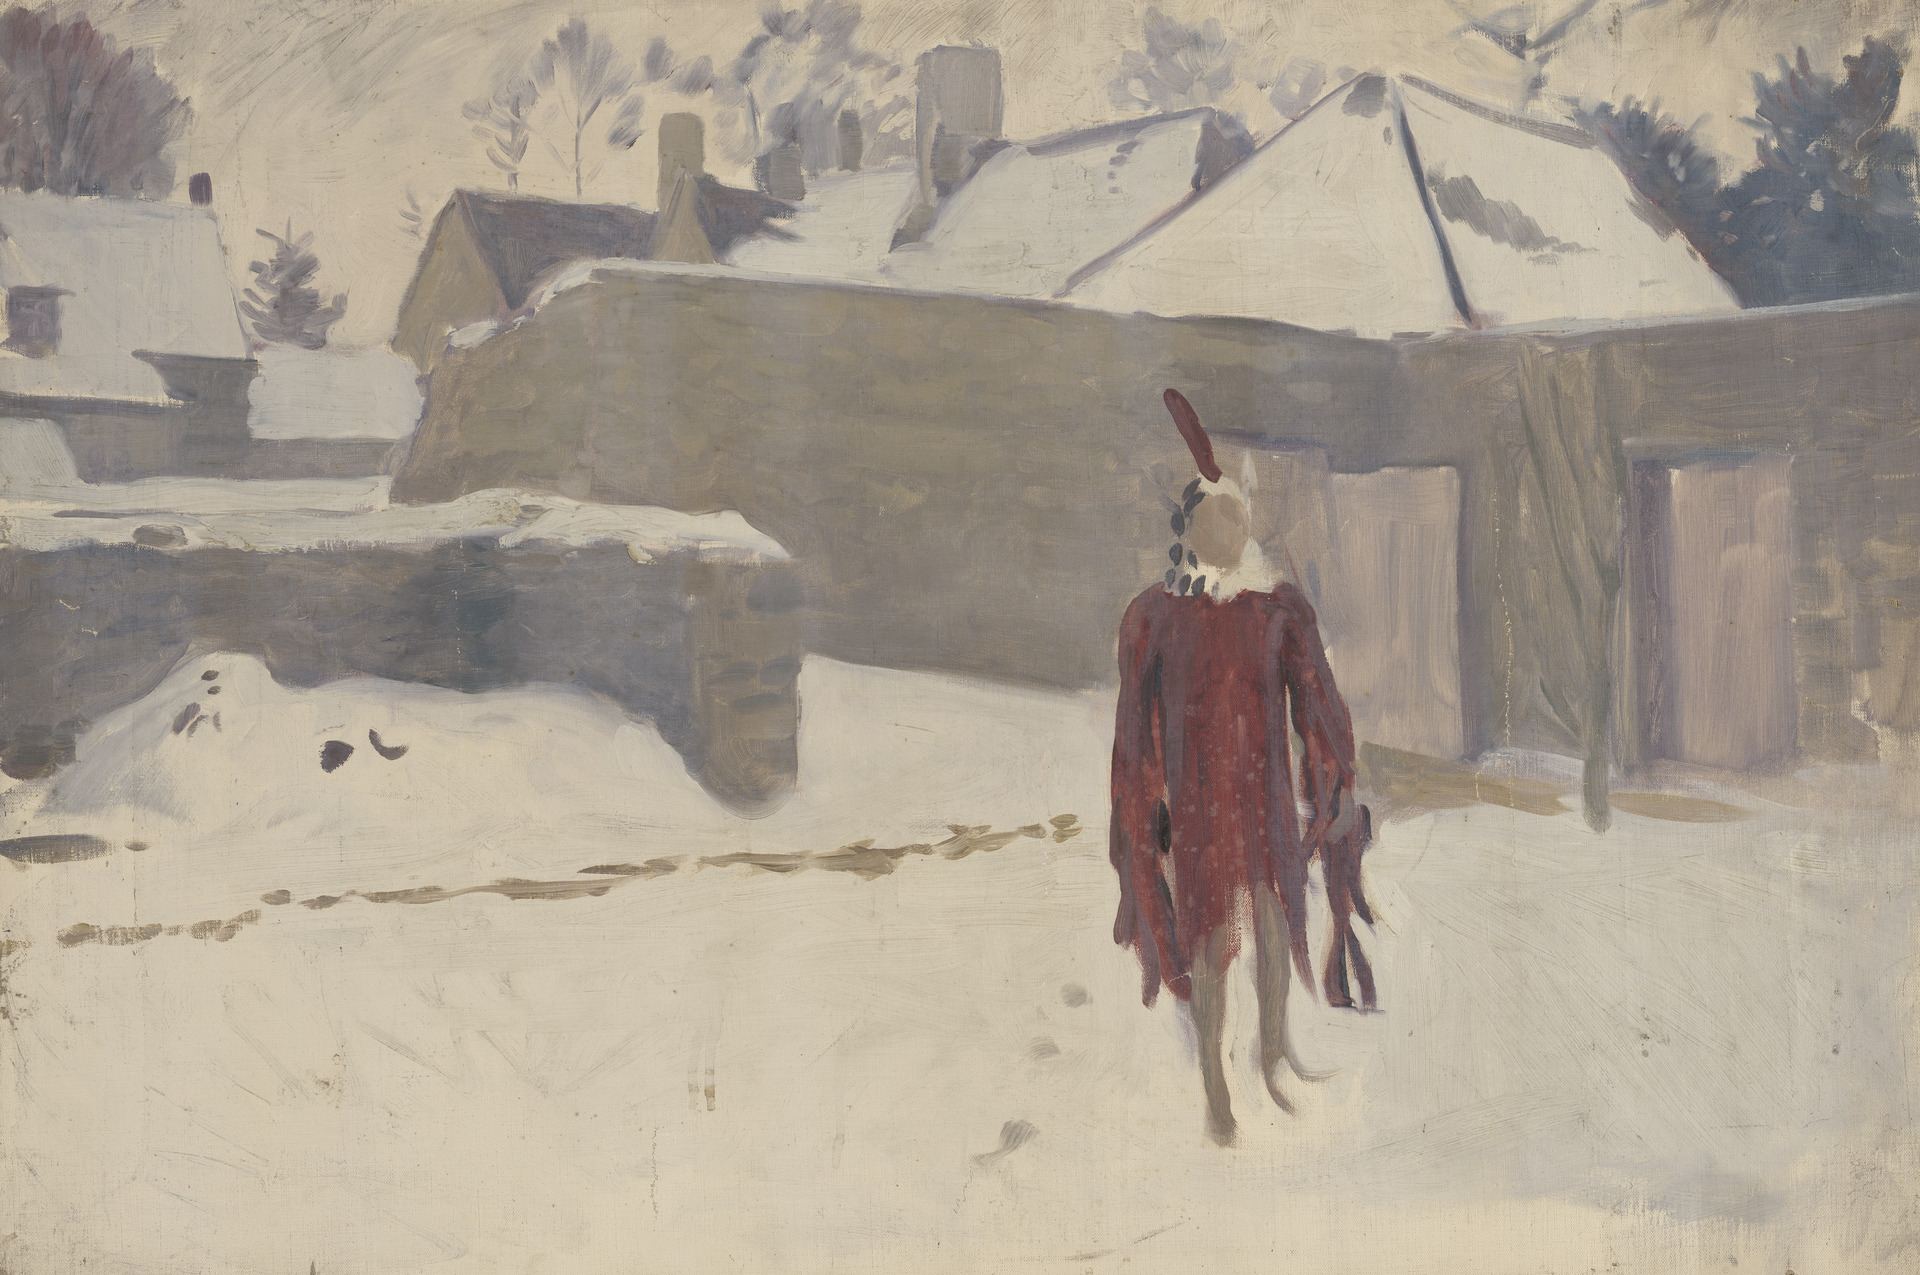 Figurína ve sněhu by John Singer Sargent - cca. 1891–93 - 63,5 x 76,2 cm 